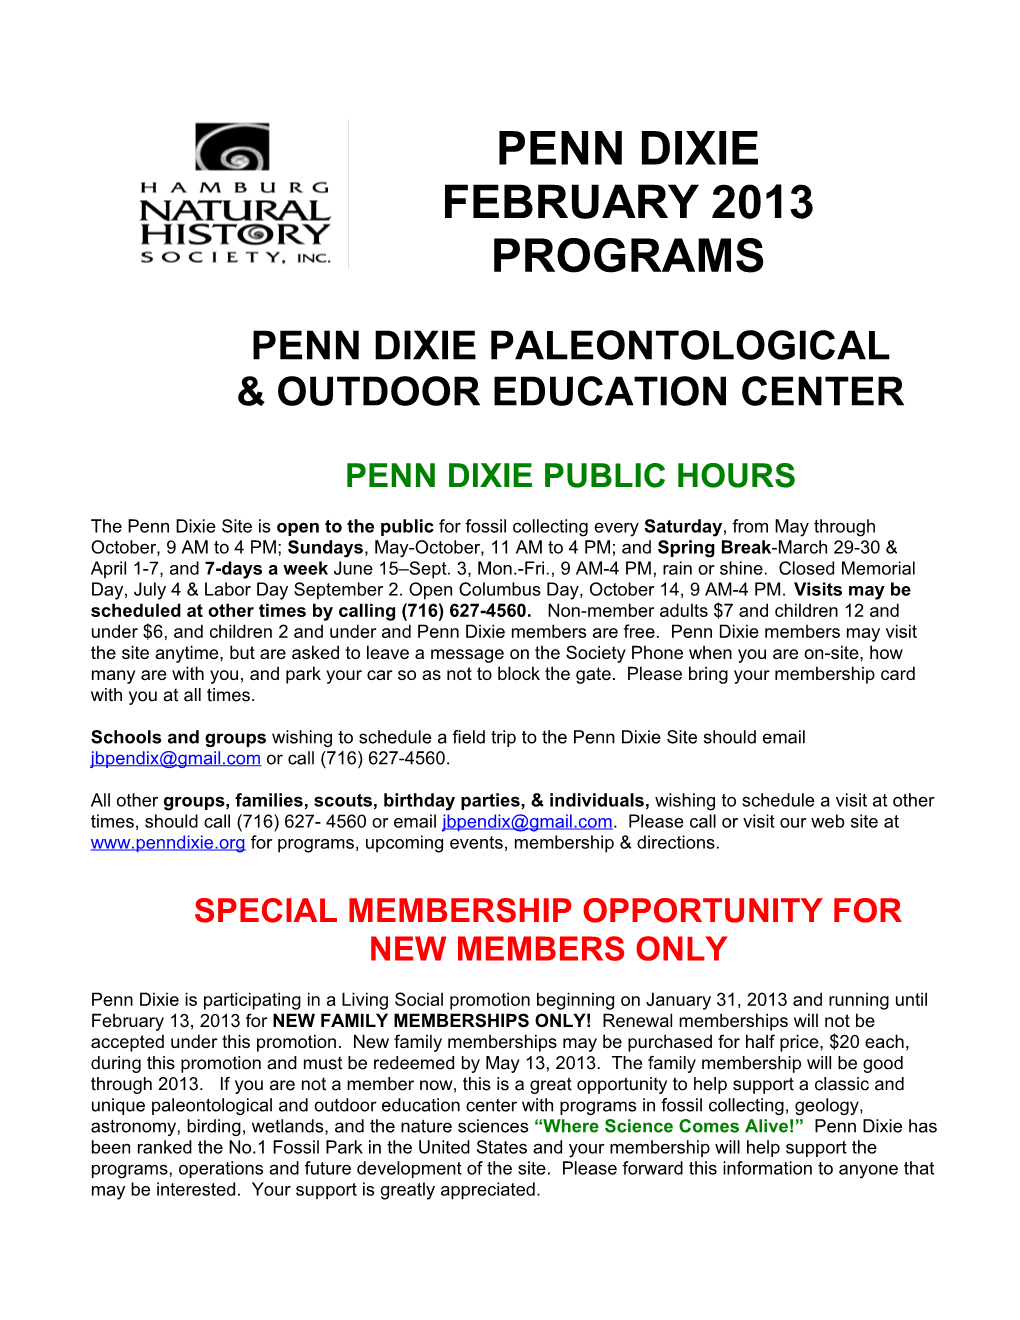 Penn Dixie Paleontological